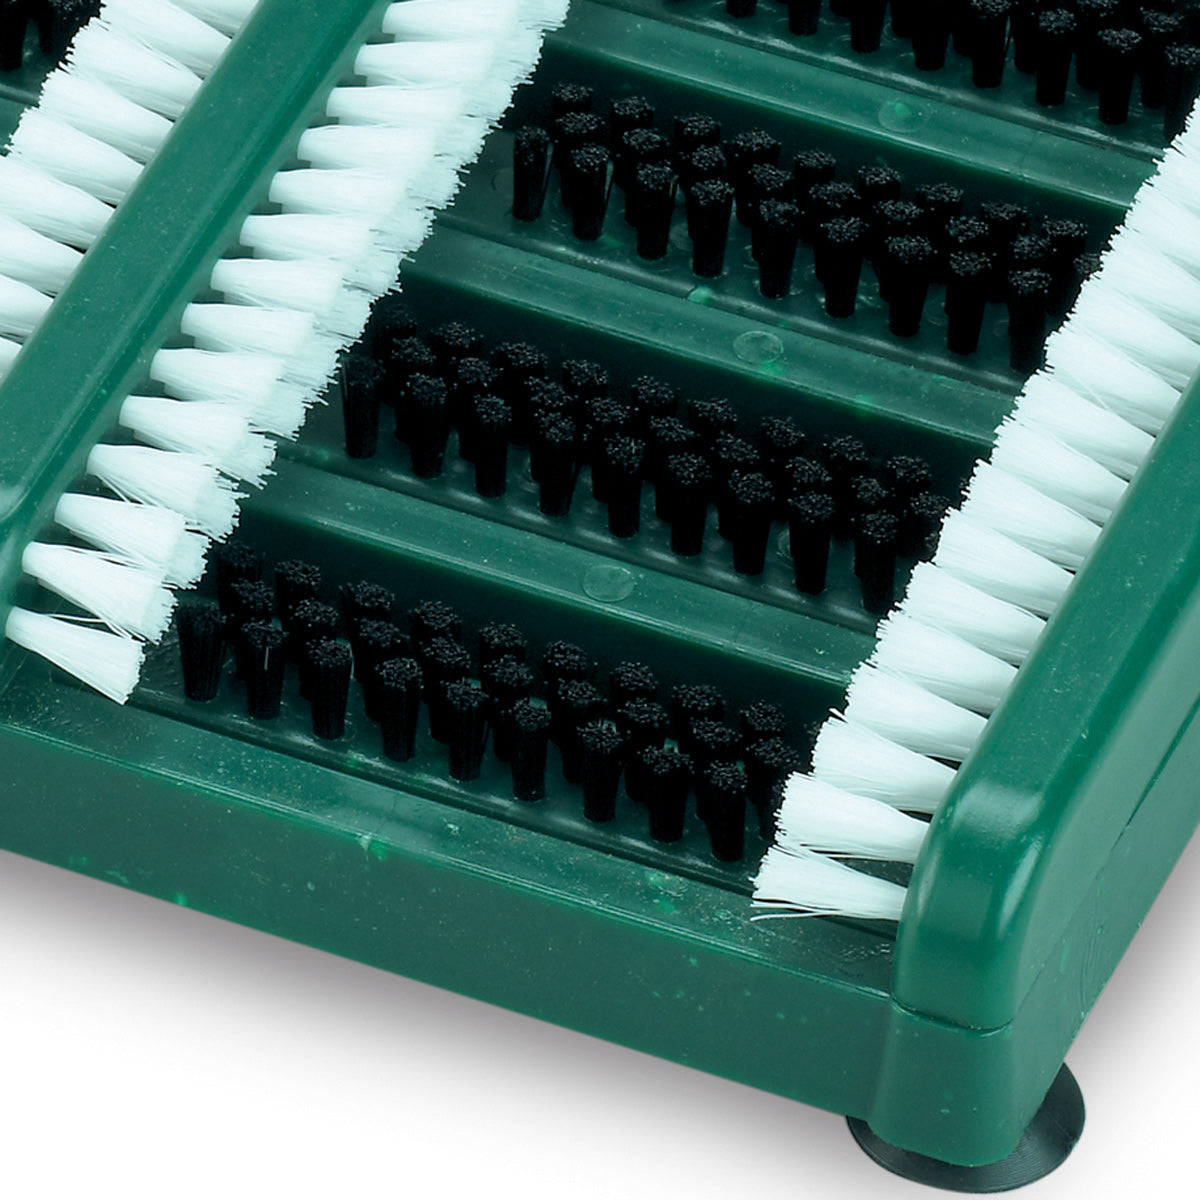 SHOE SCRUB PLASTIC - Shoe Brush Tray